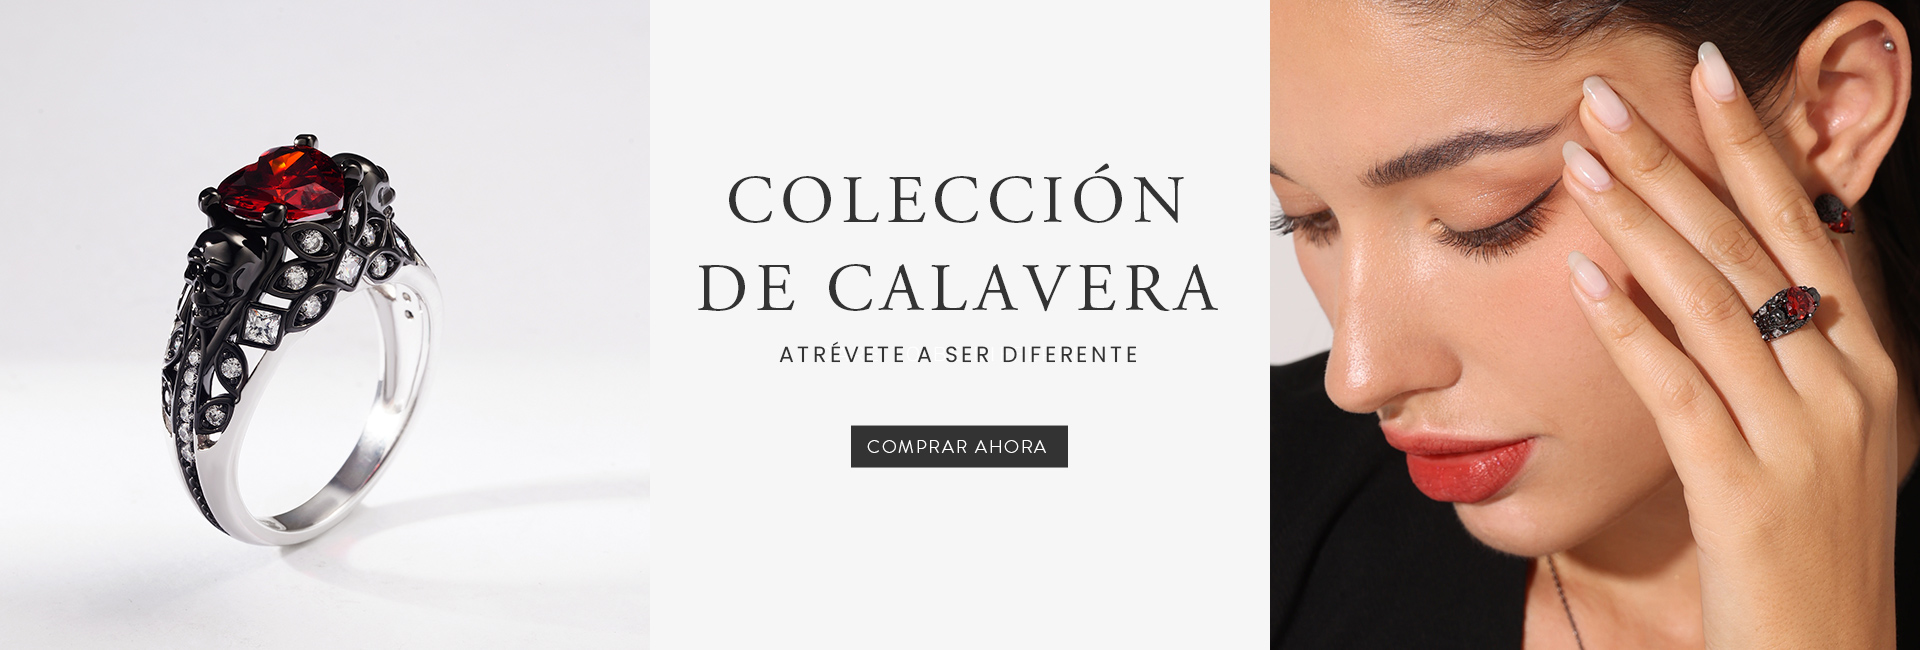 Colección de Calavera